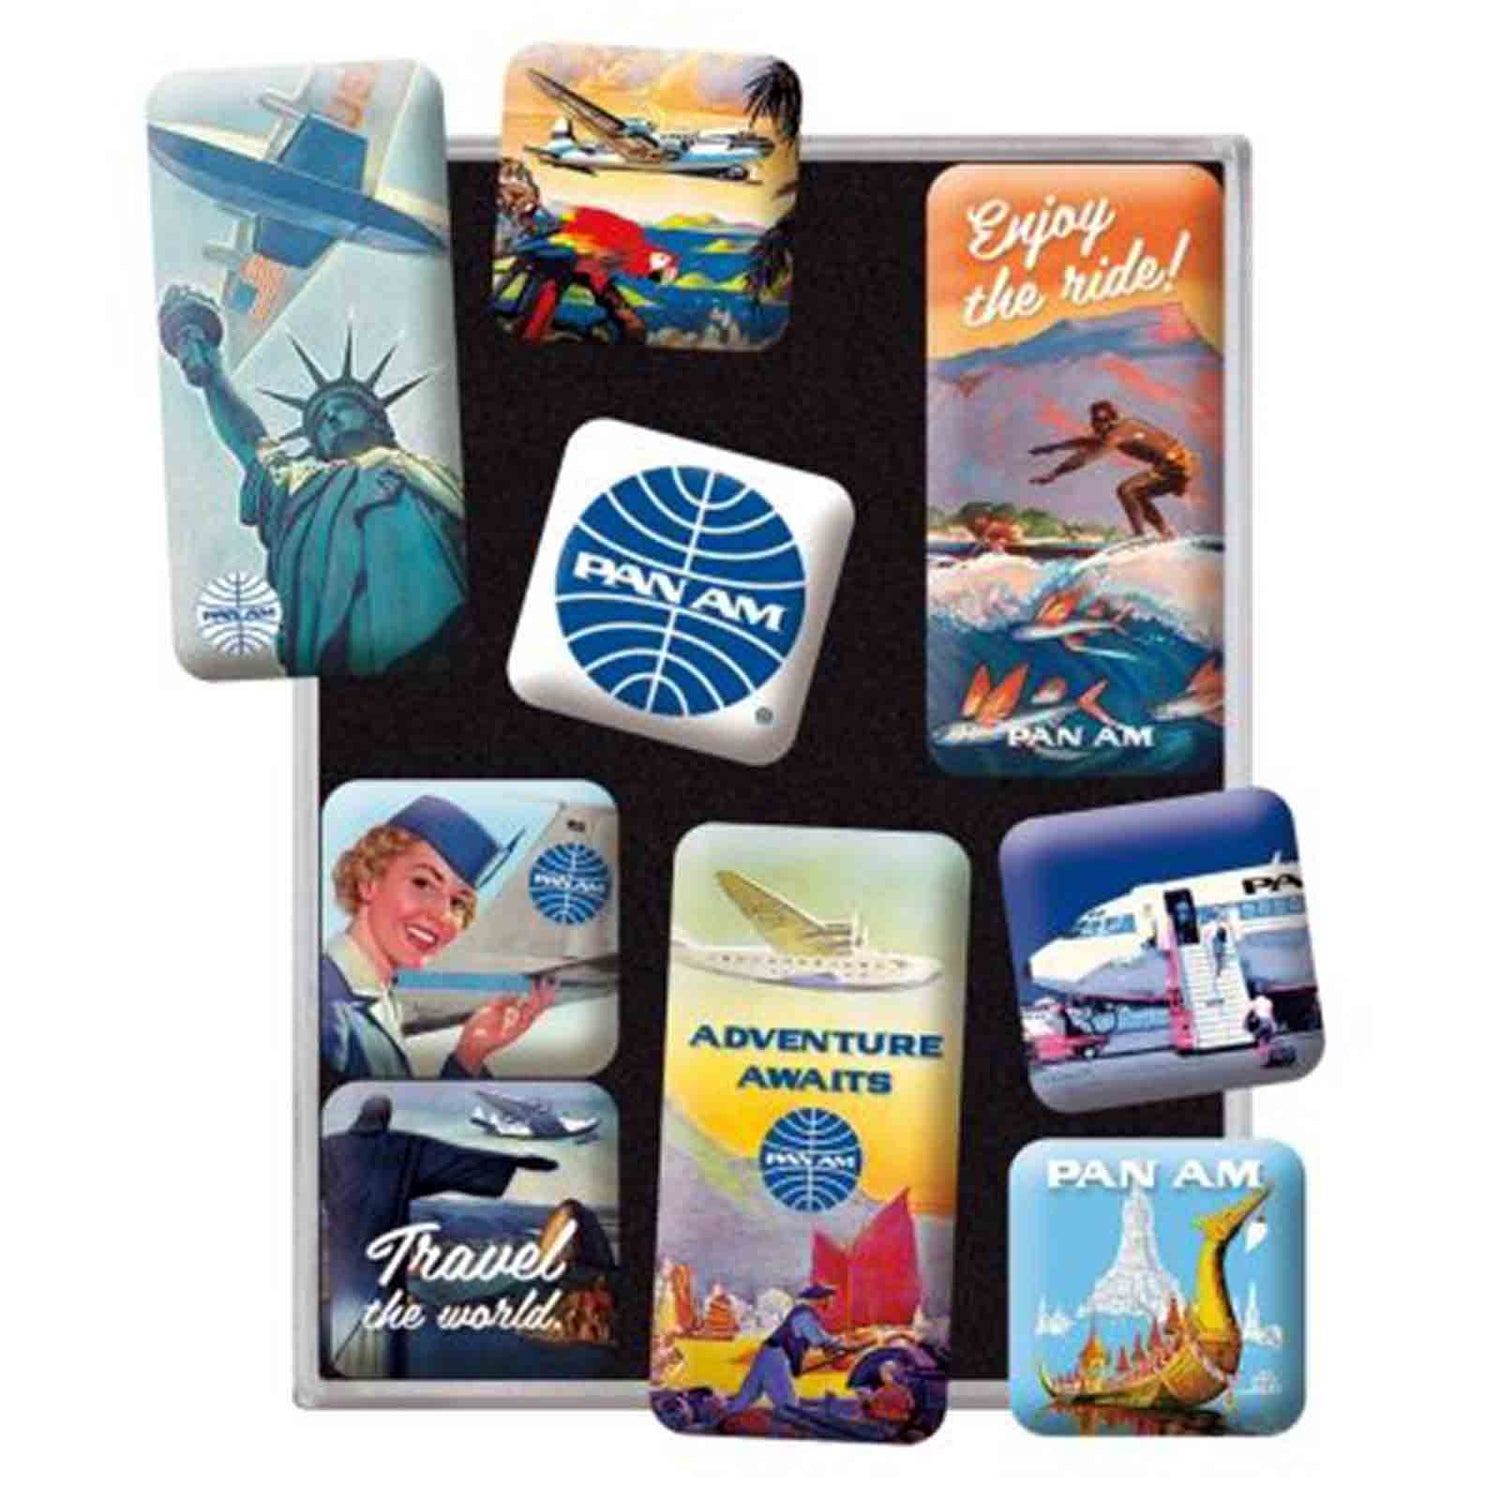 Pan Am Travel The World Posters Set of 9 Nostalgic Art Magnets